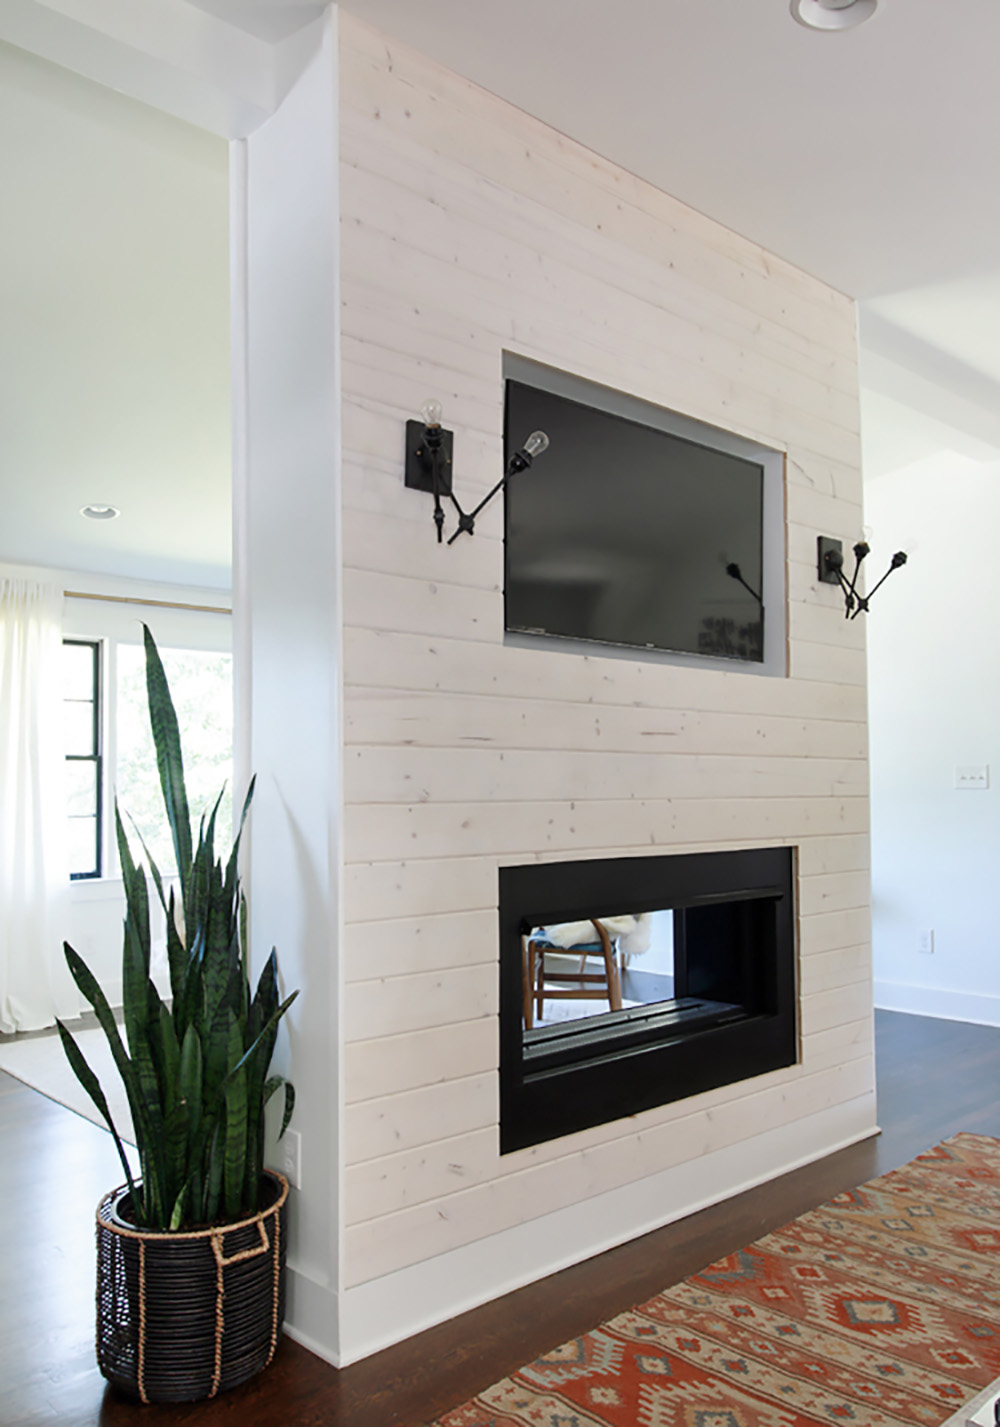 DIY Modern Shiplap Fireplace Featuring Beachwood Boards The Home Depot